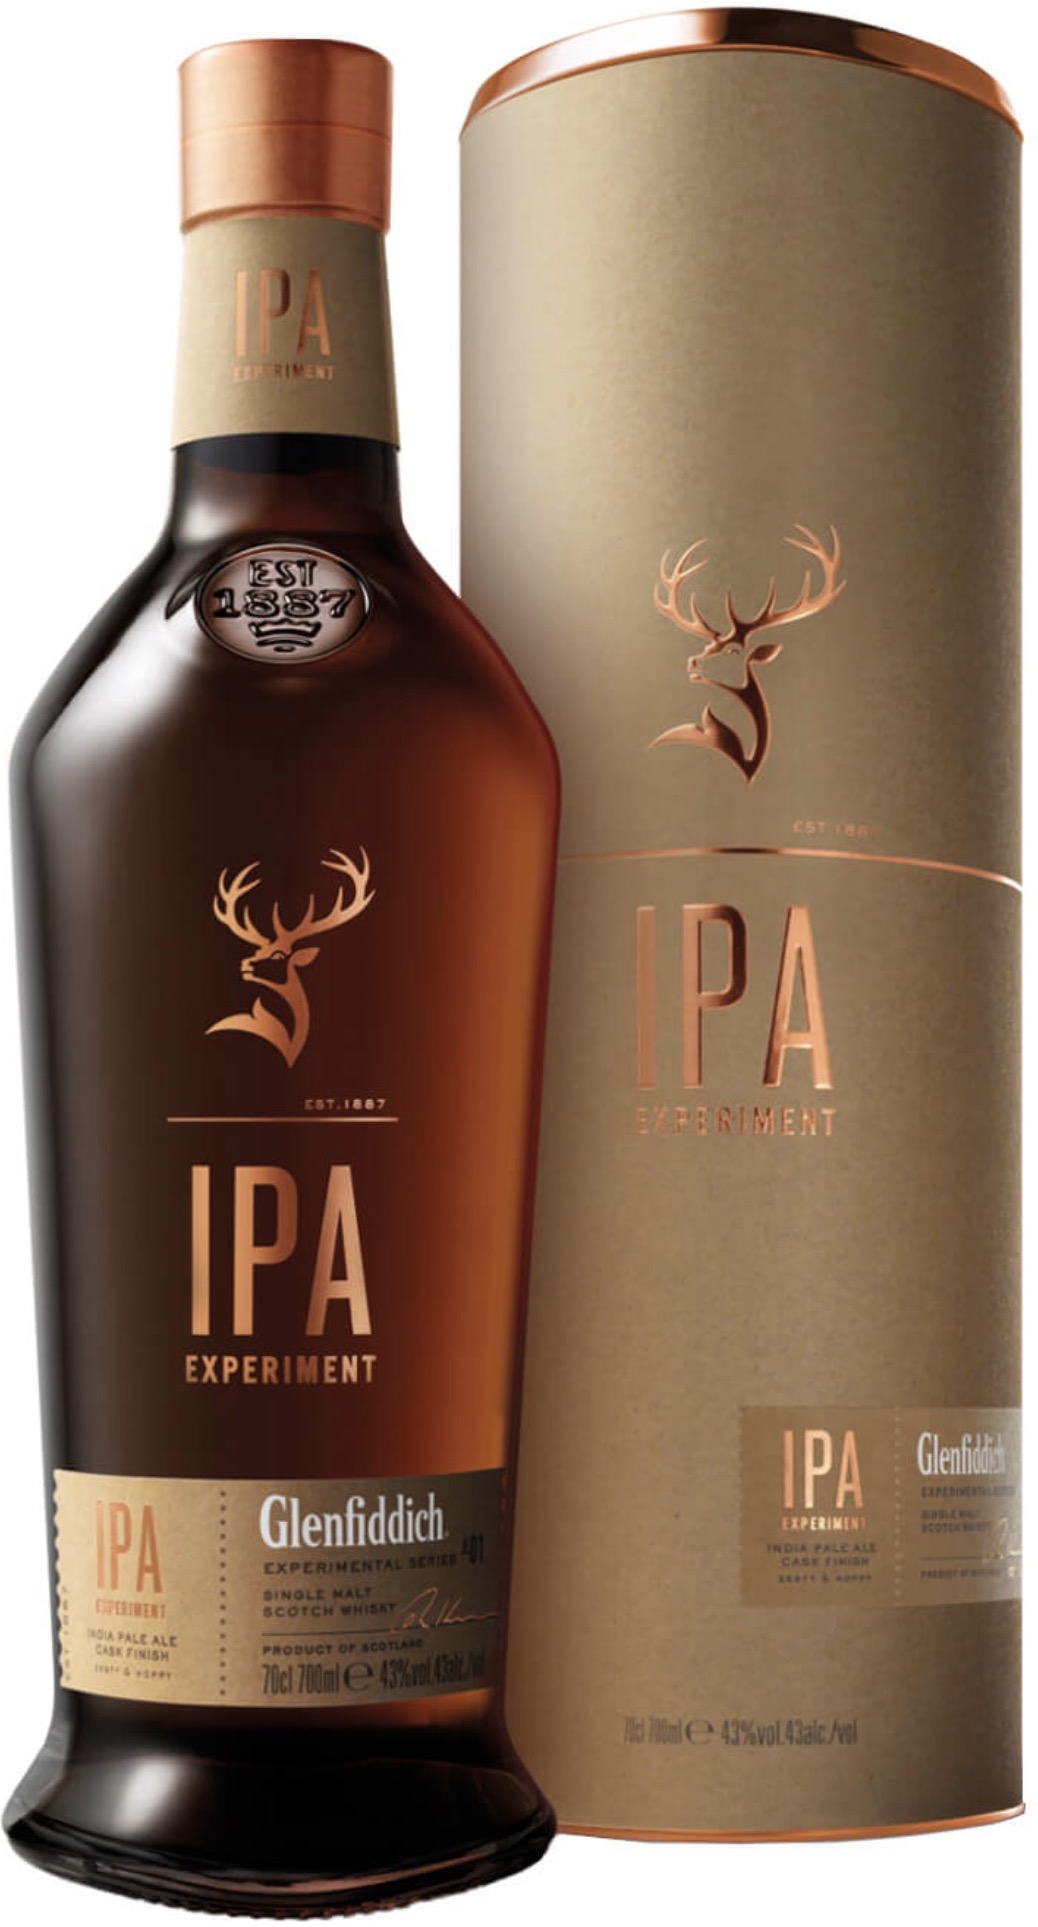 Glenfiddich IPA India Pale Ale Cask Finish Single Malt Scotch Whisky PG 43 % 0,7l